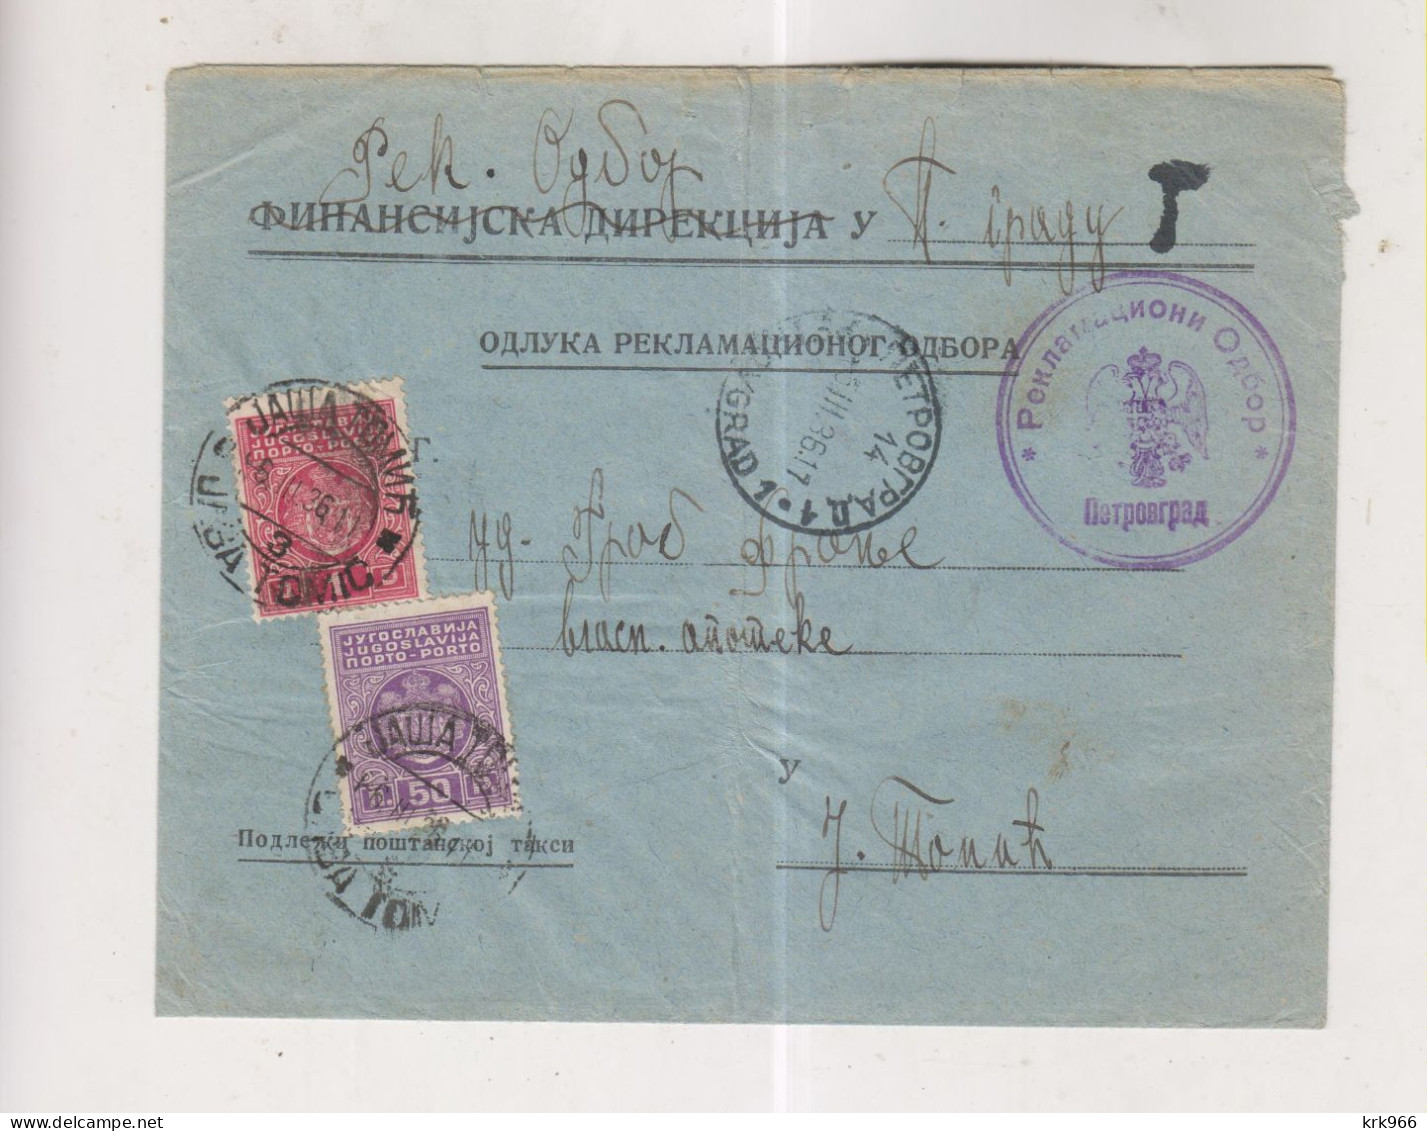 YUGOSLAVIA PETROVGRAD 1936 Nice Official Cover To JASA TOMIC Postage Due - Briefe U. Dokumente